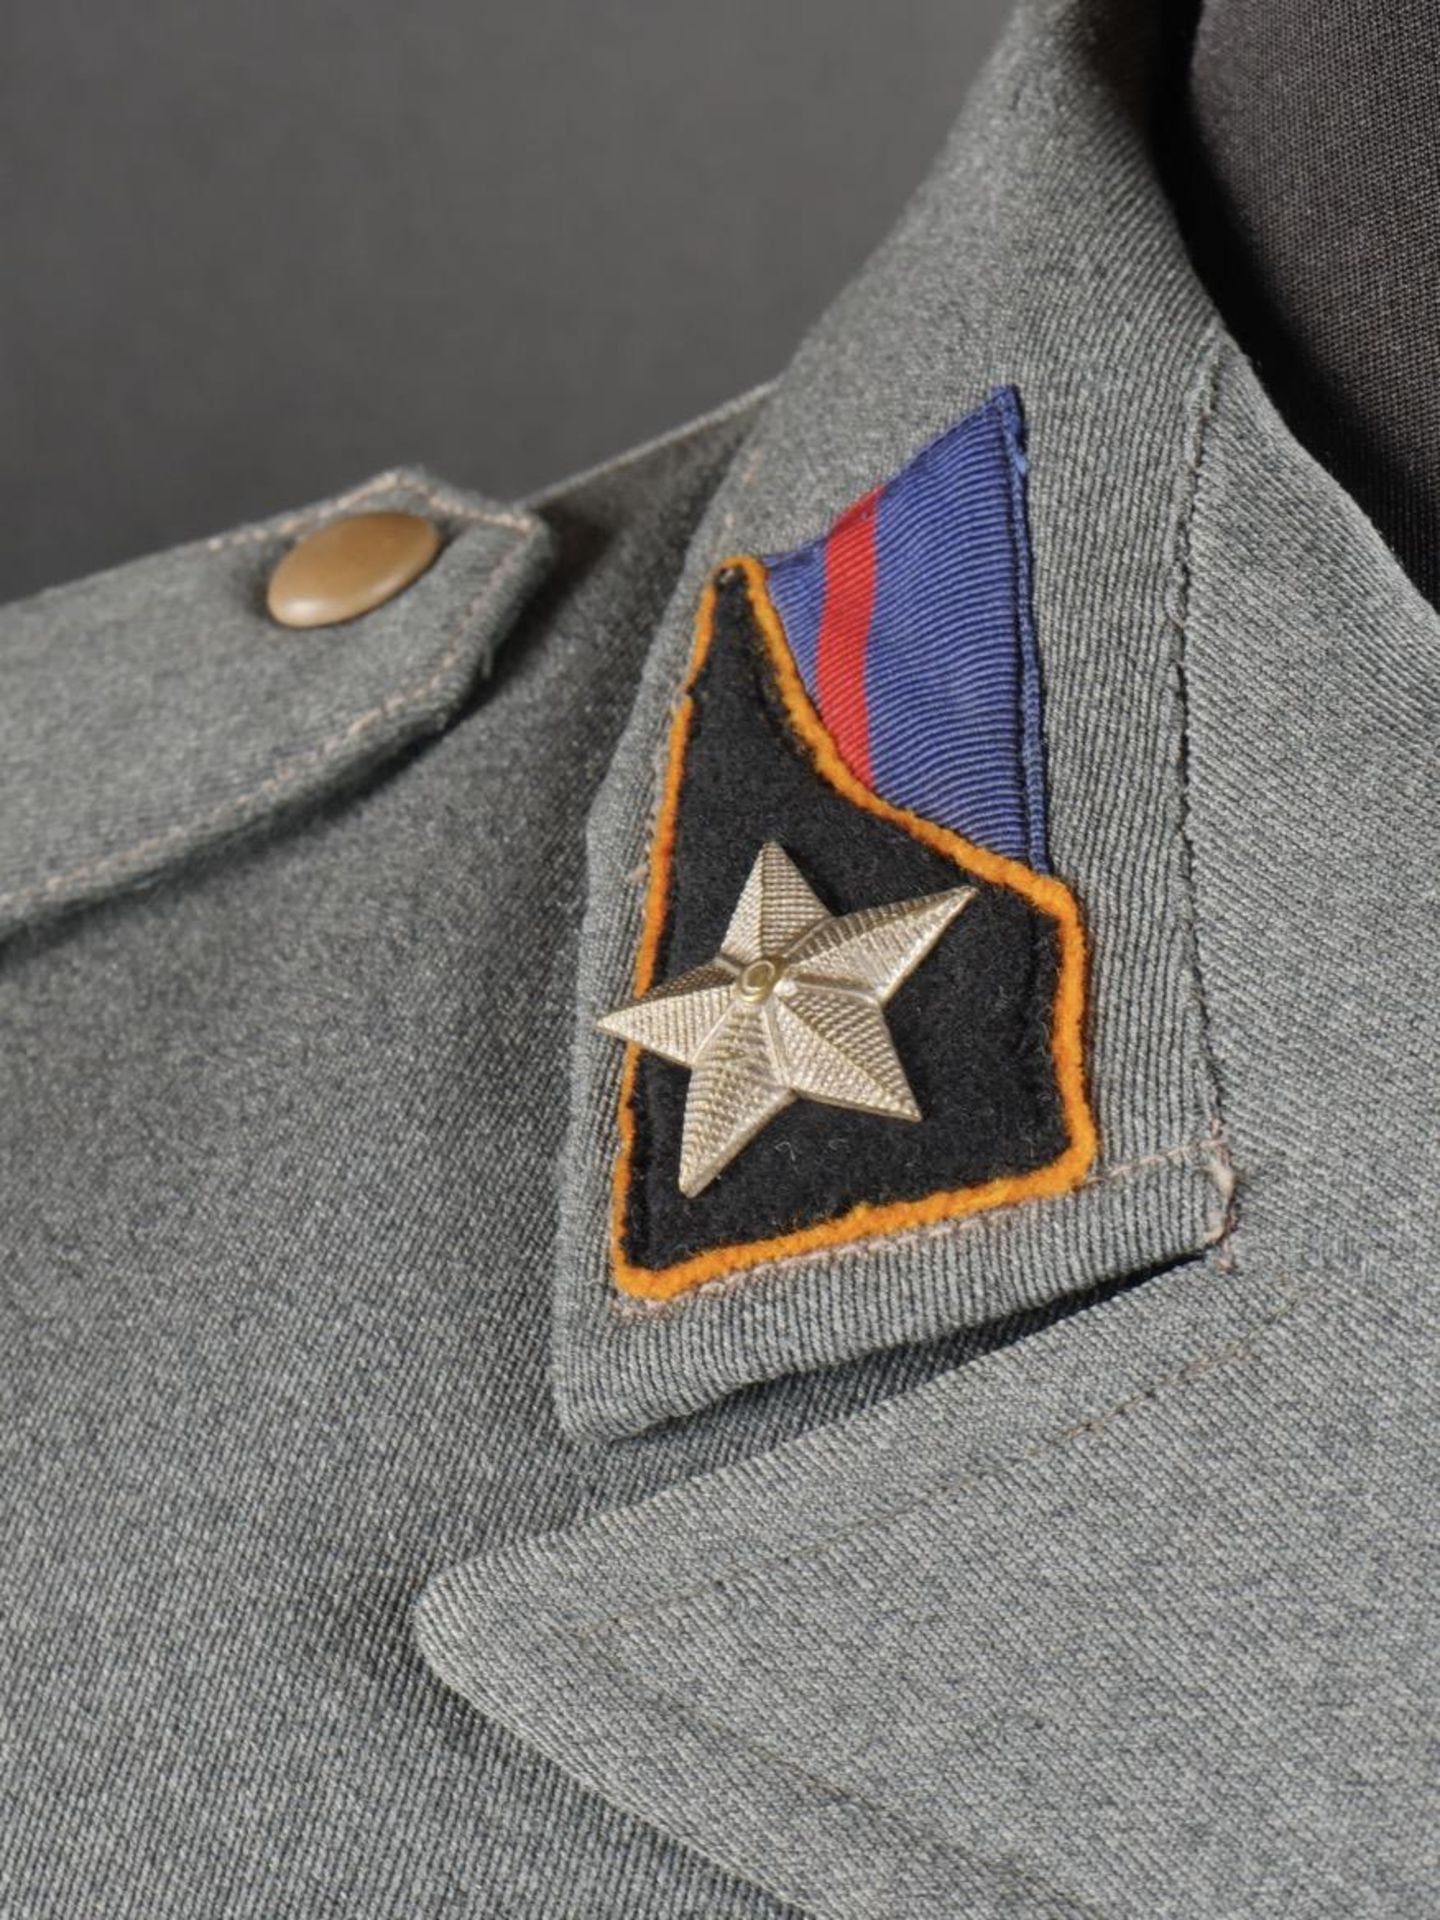 Vareuse de Carlo Boromi, colonel du Regiment Artillerie de la Division Bergamo. Jacket of Carlo Bo - Image 11 of 19